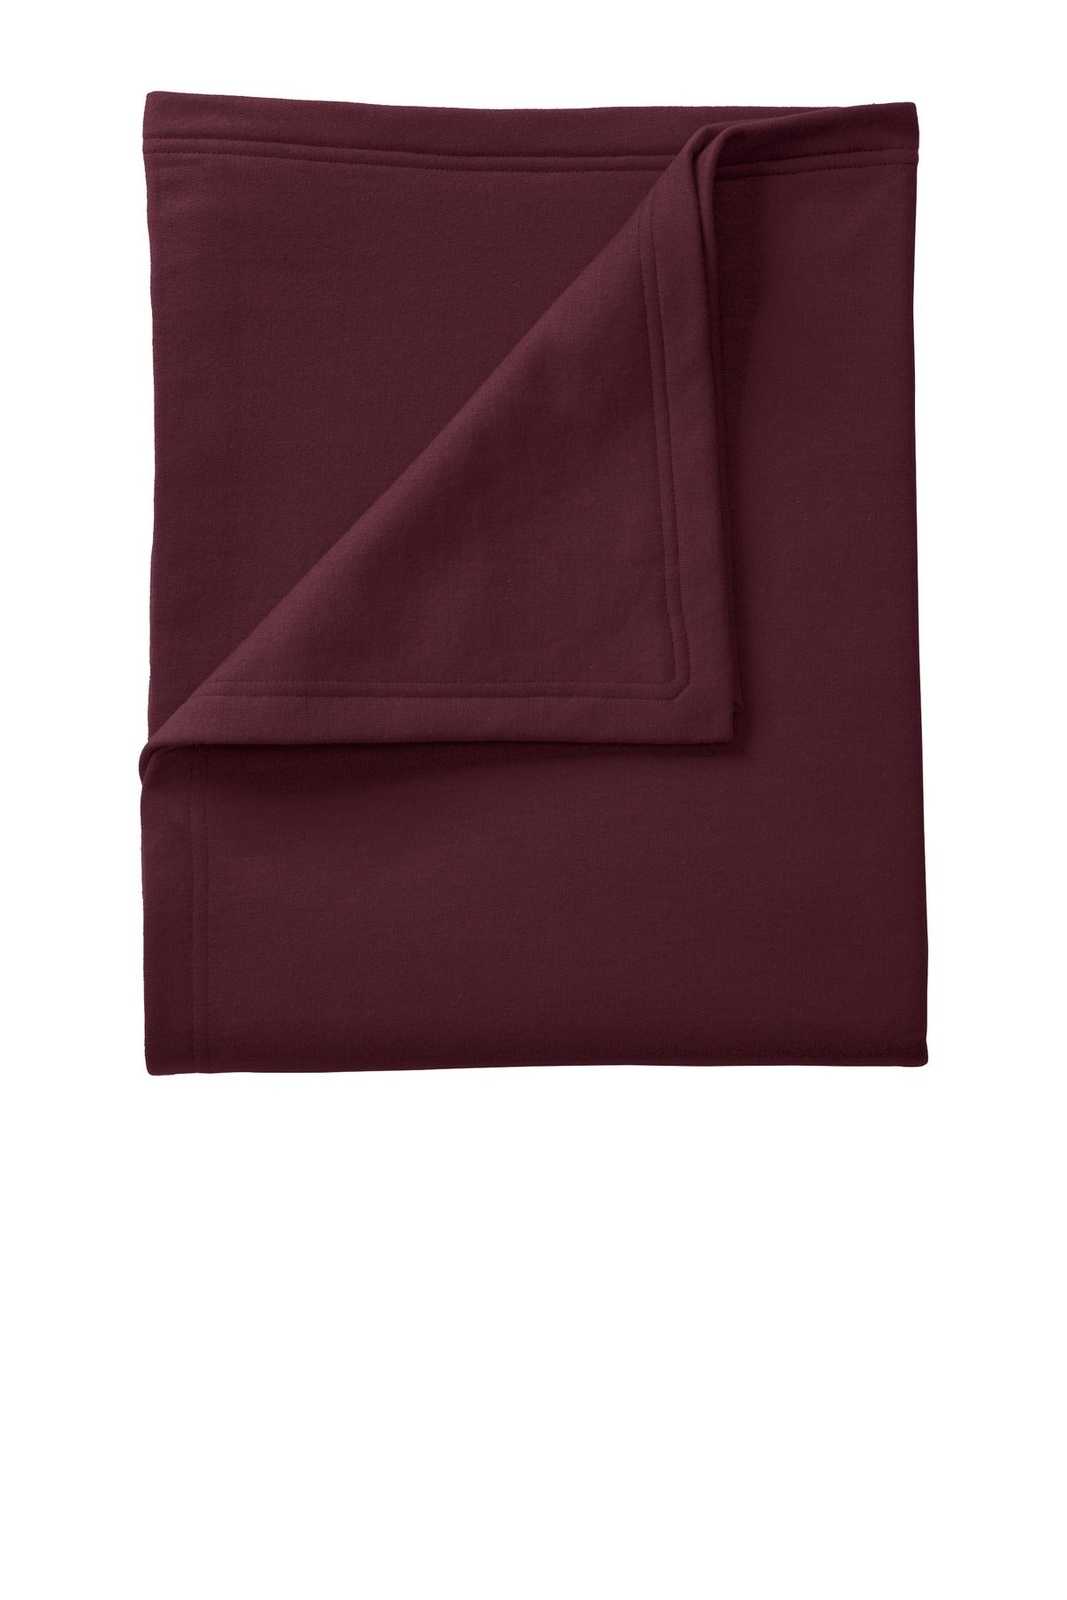 Port & Company BP78 Core Fleece Sweatshirt Blanket - Maroon - HIT a Double - 1